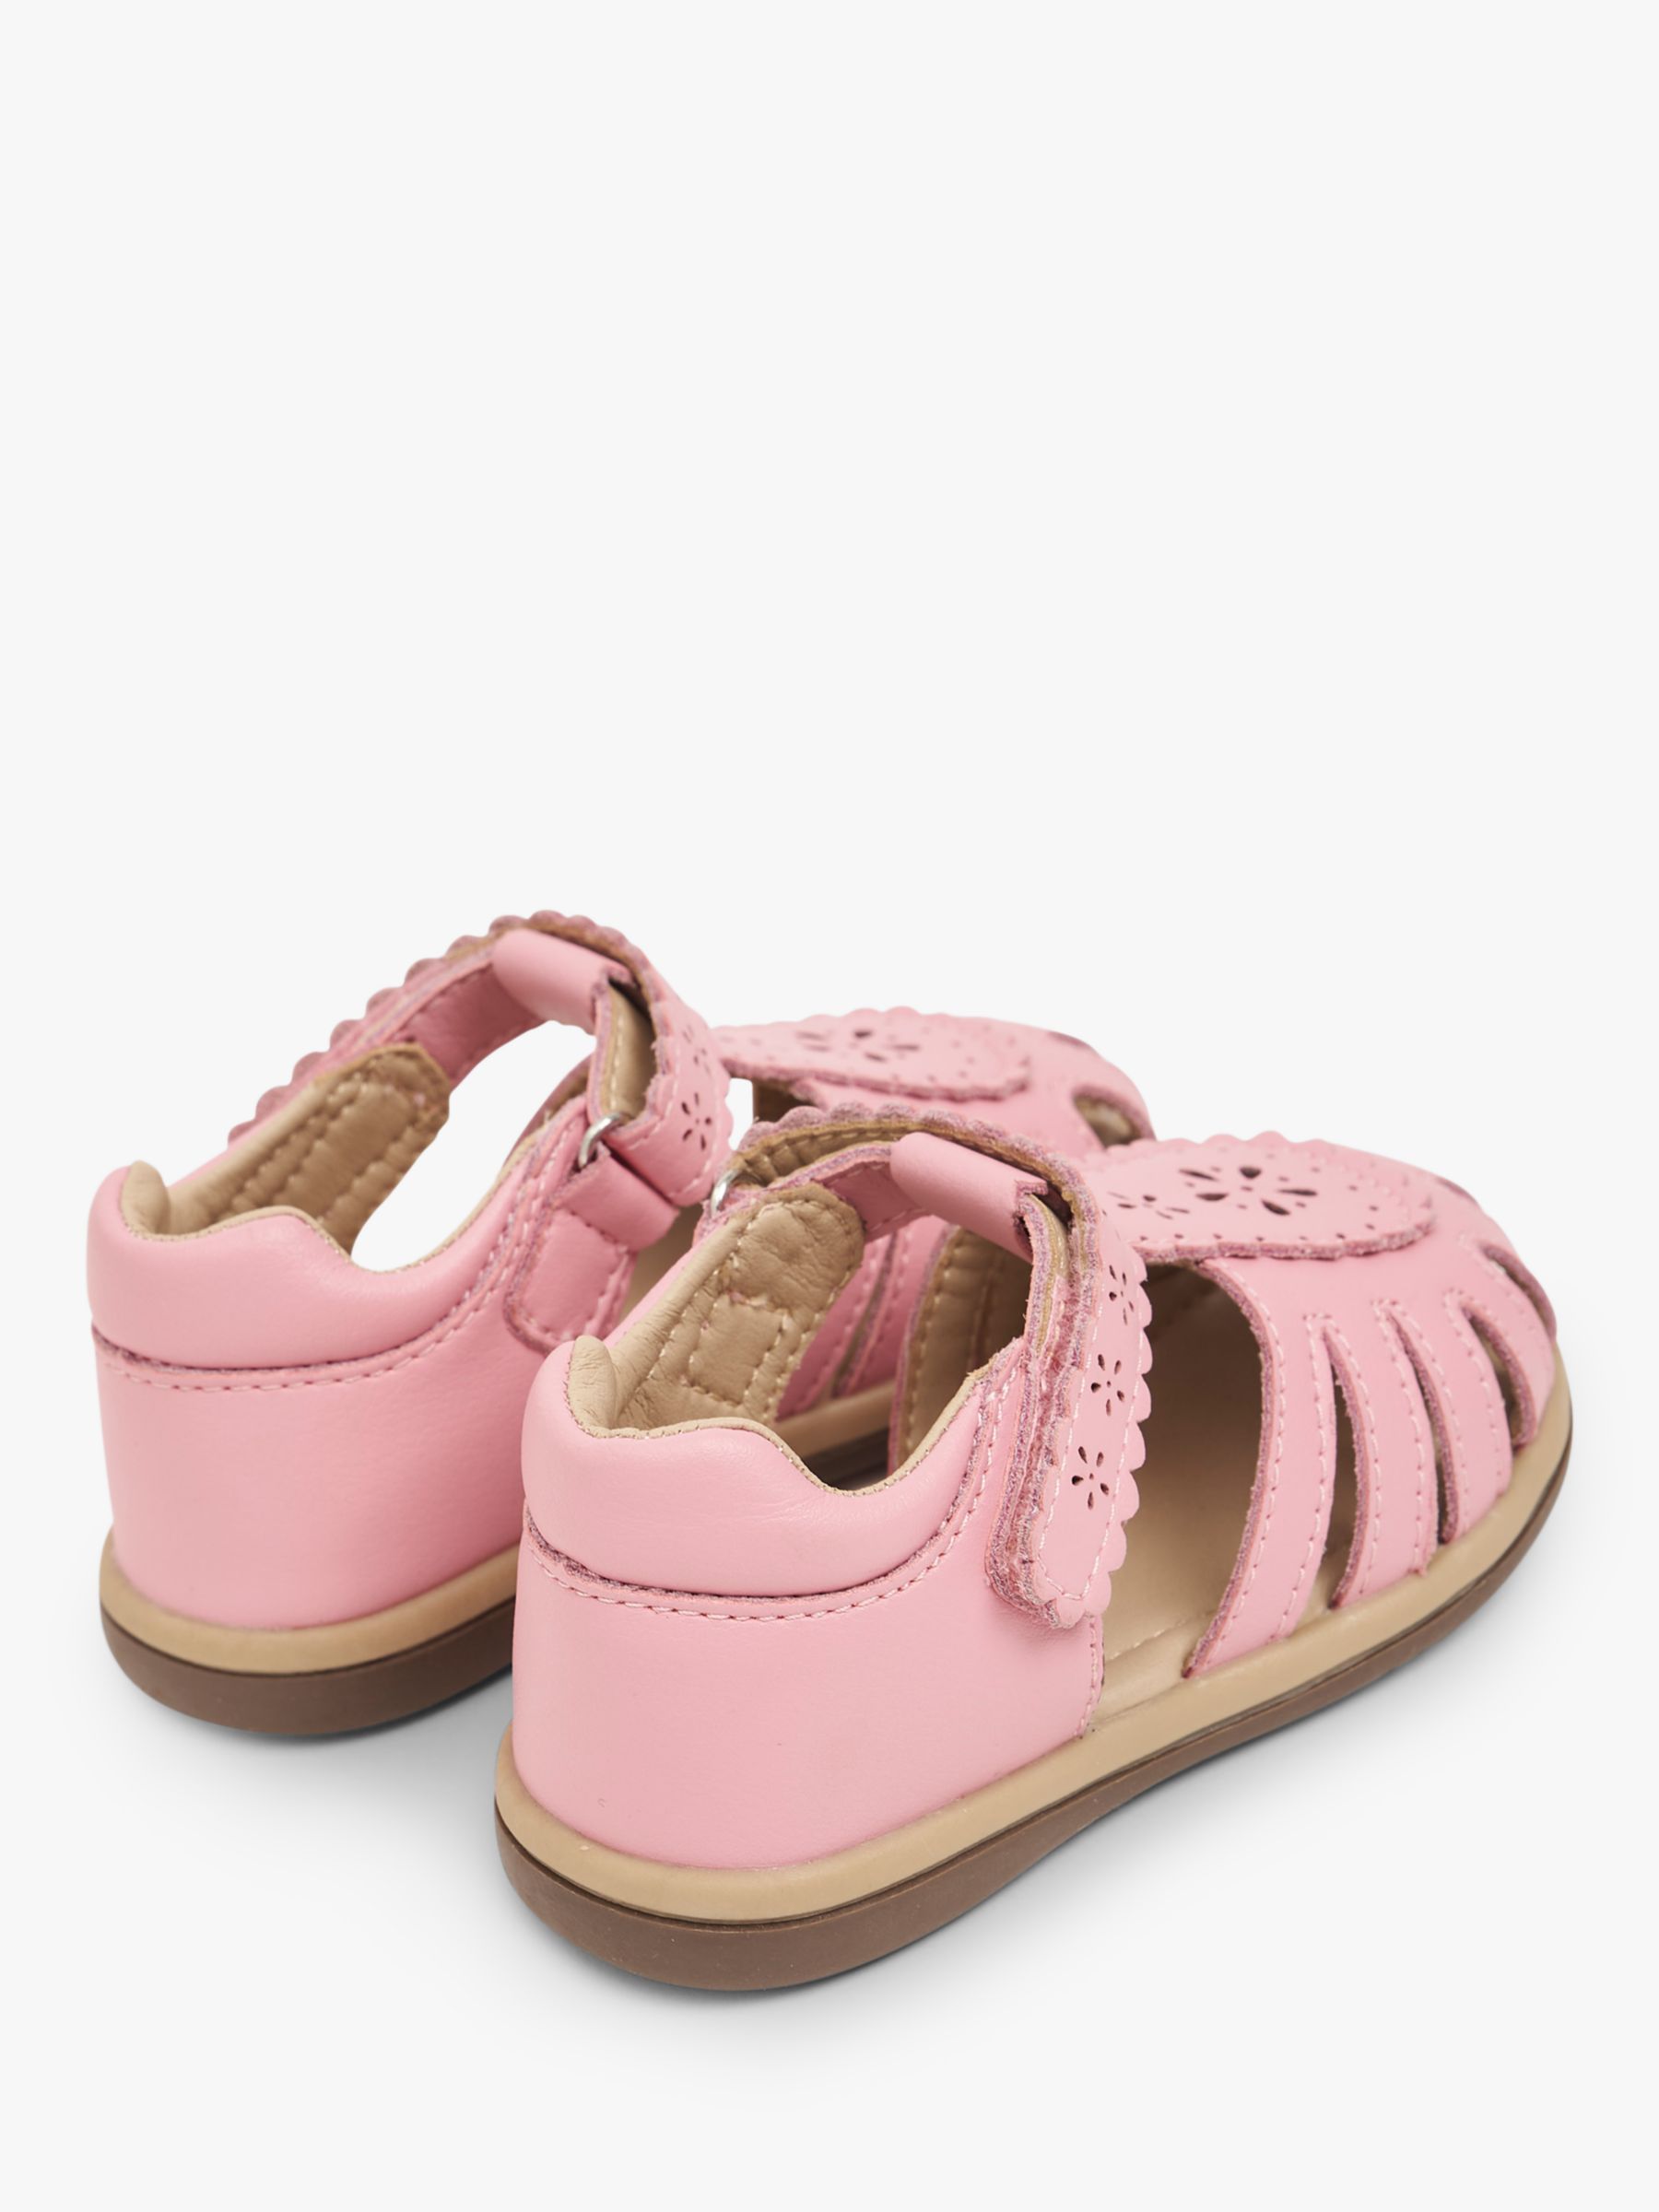 Buy JoJo Maman Bébé Kids' Leather Floral Etched Sandals, Pink Online at johnlewis.com